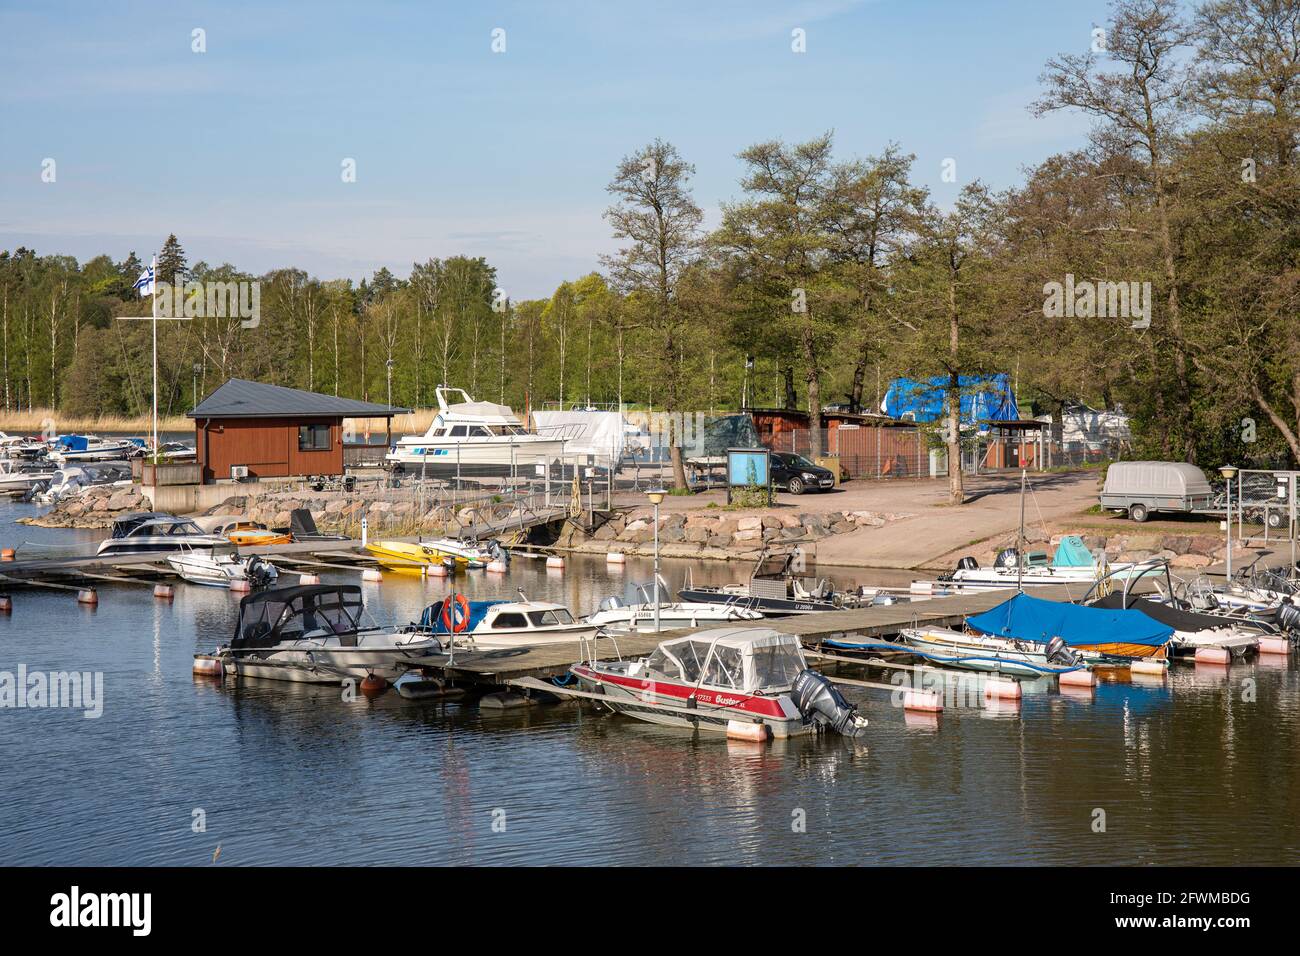 Munkan venekerho jetties and boats at Ramsaynranta in Munkkiniemi district of Helsinki, Finland. Also the murder place of Satu Sallinen in 1997. Stock Photo